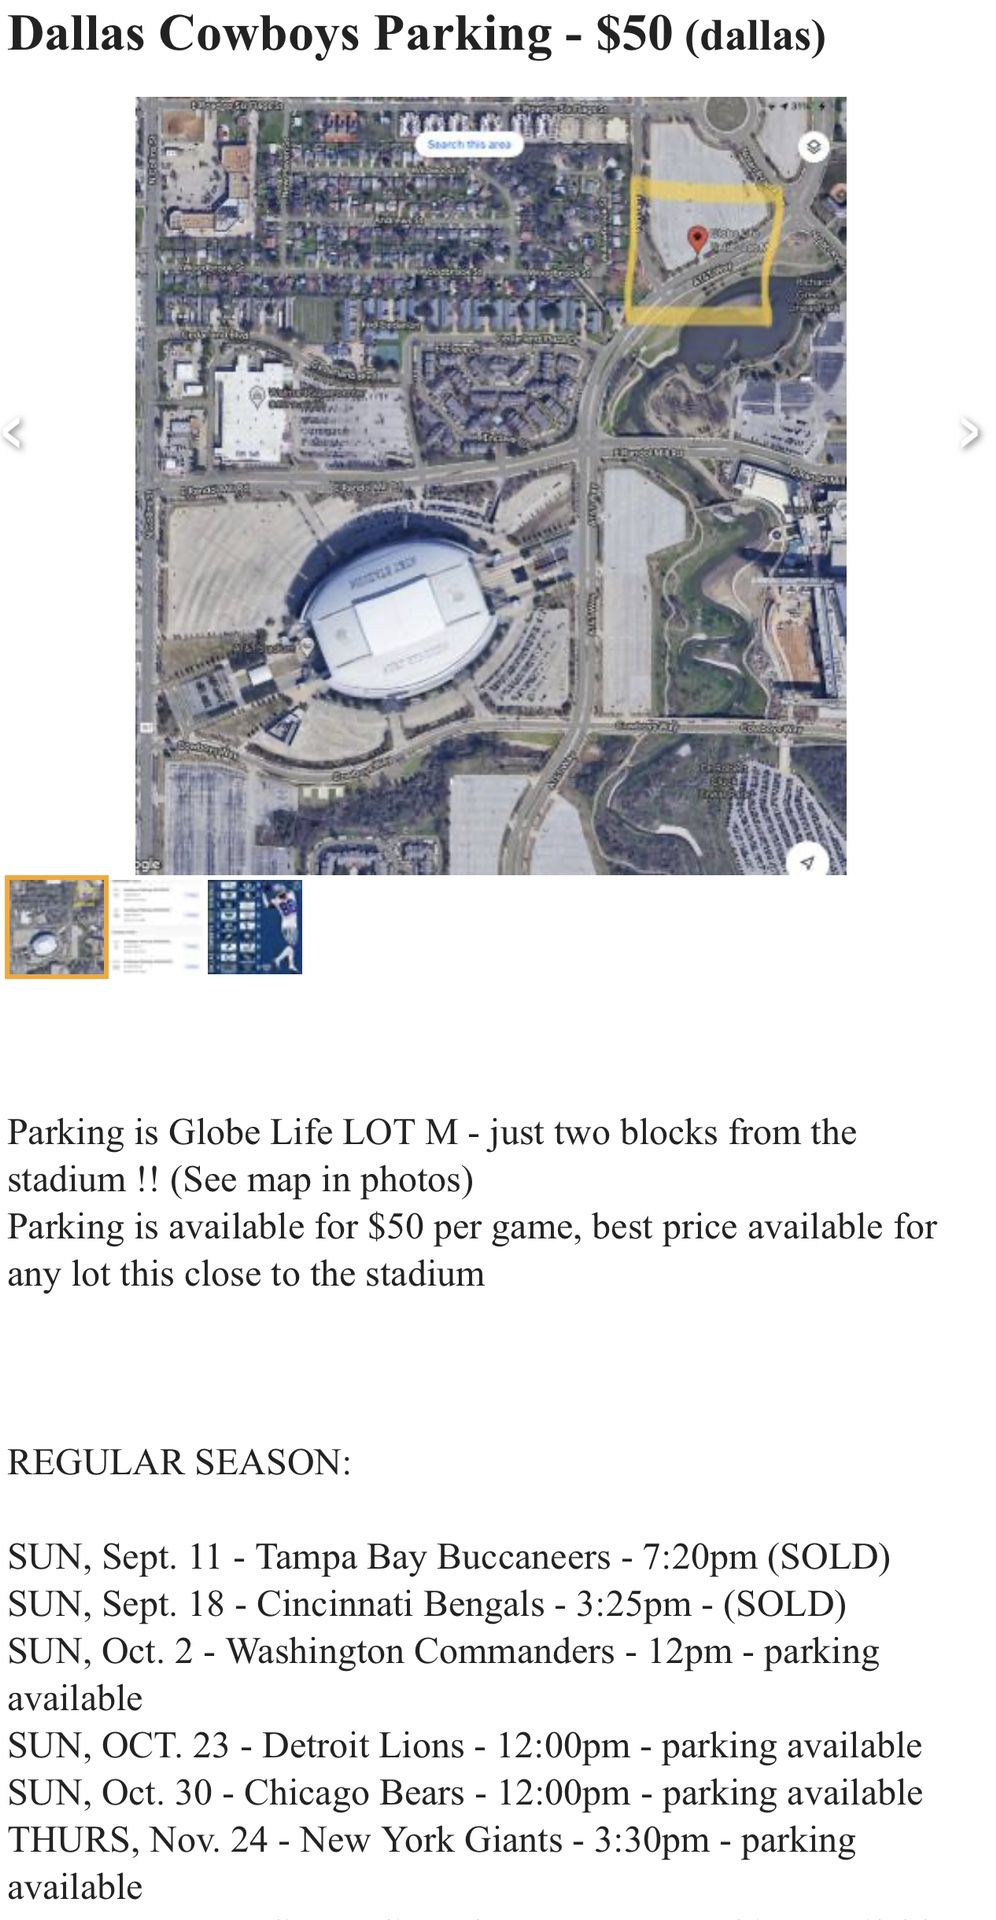 Dallas Cowboys Parking – Globe Life Lot M - 